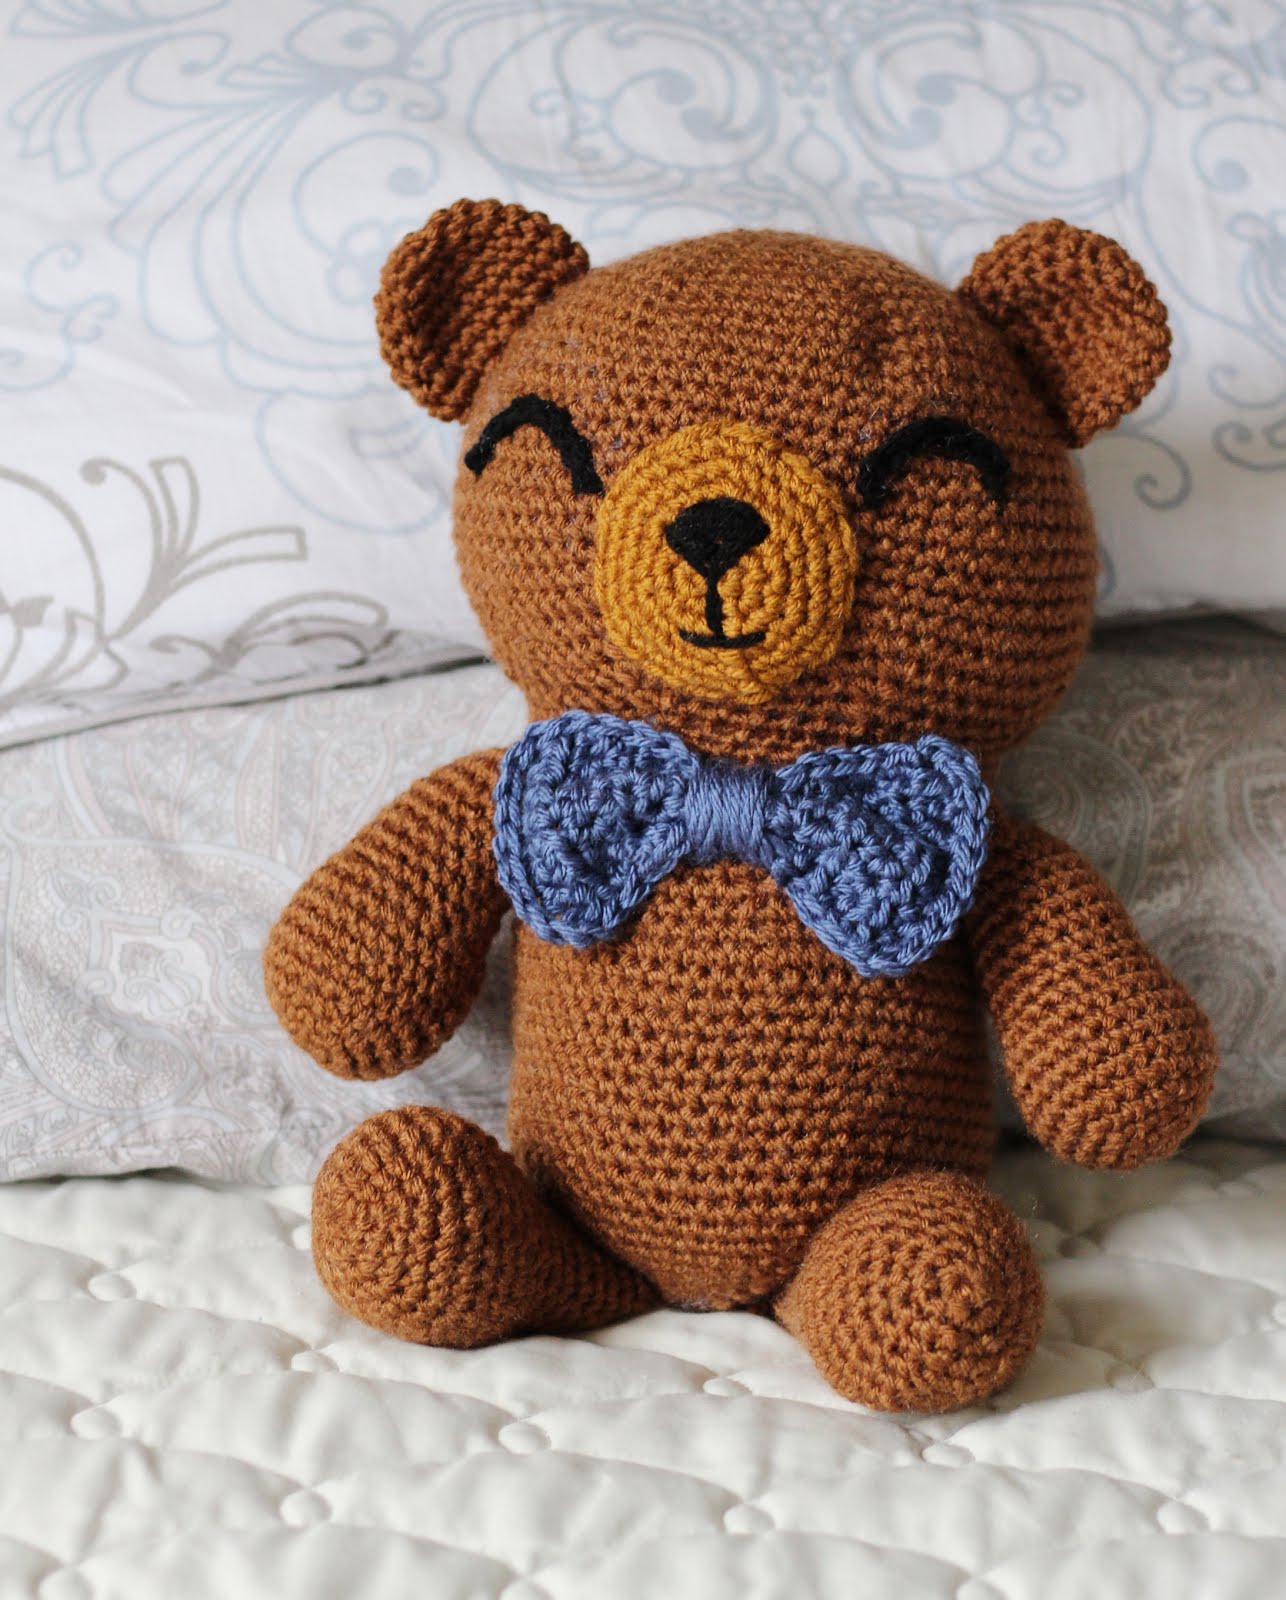 Crochet bear